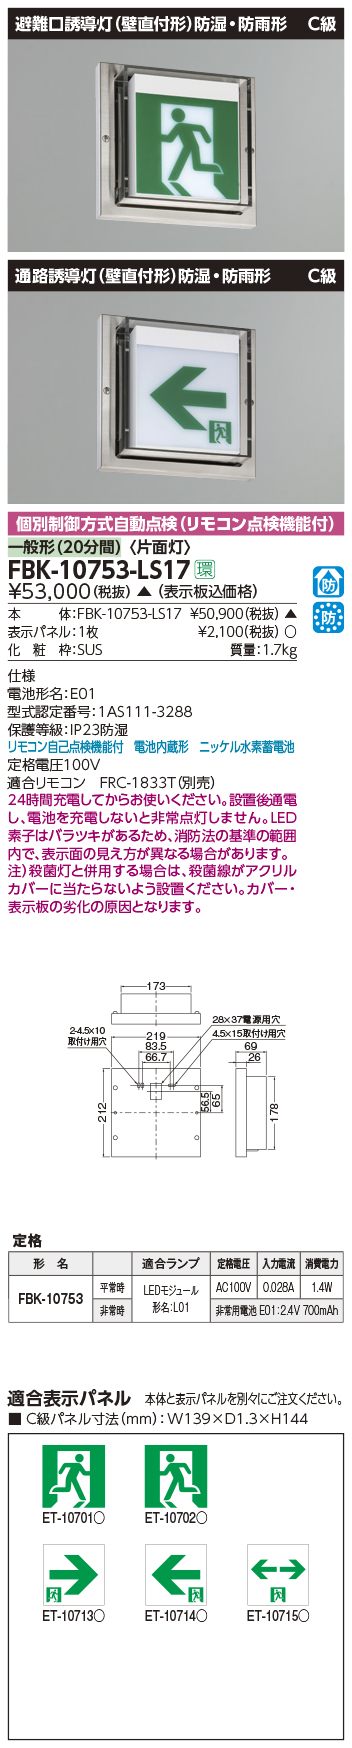 東芝　FBK-20771-LS17　LED誘導灯(壁埋込形) 片面灯 B級・BL形 個別制御方式自動点検(リモコン点検機能付) ※本体のみ 表示パネル別売 受注生産品 [§] - 4